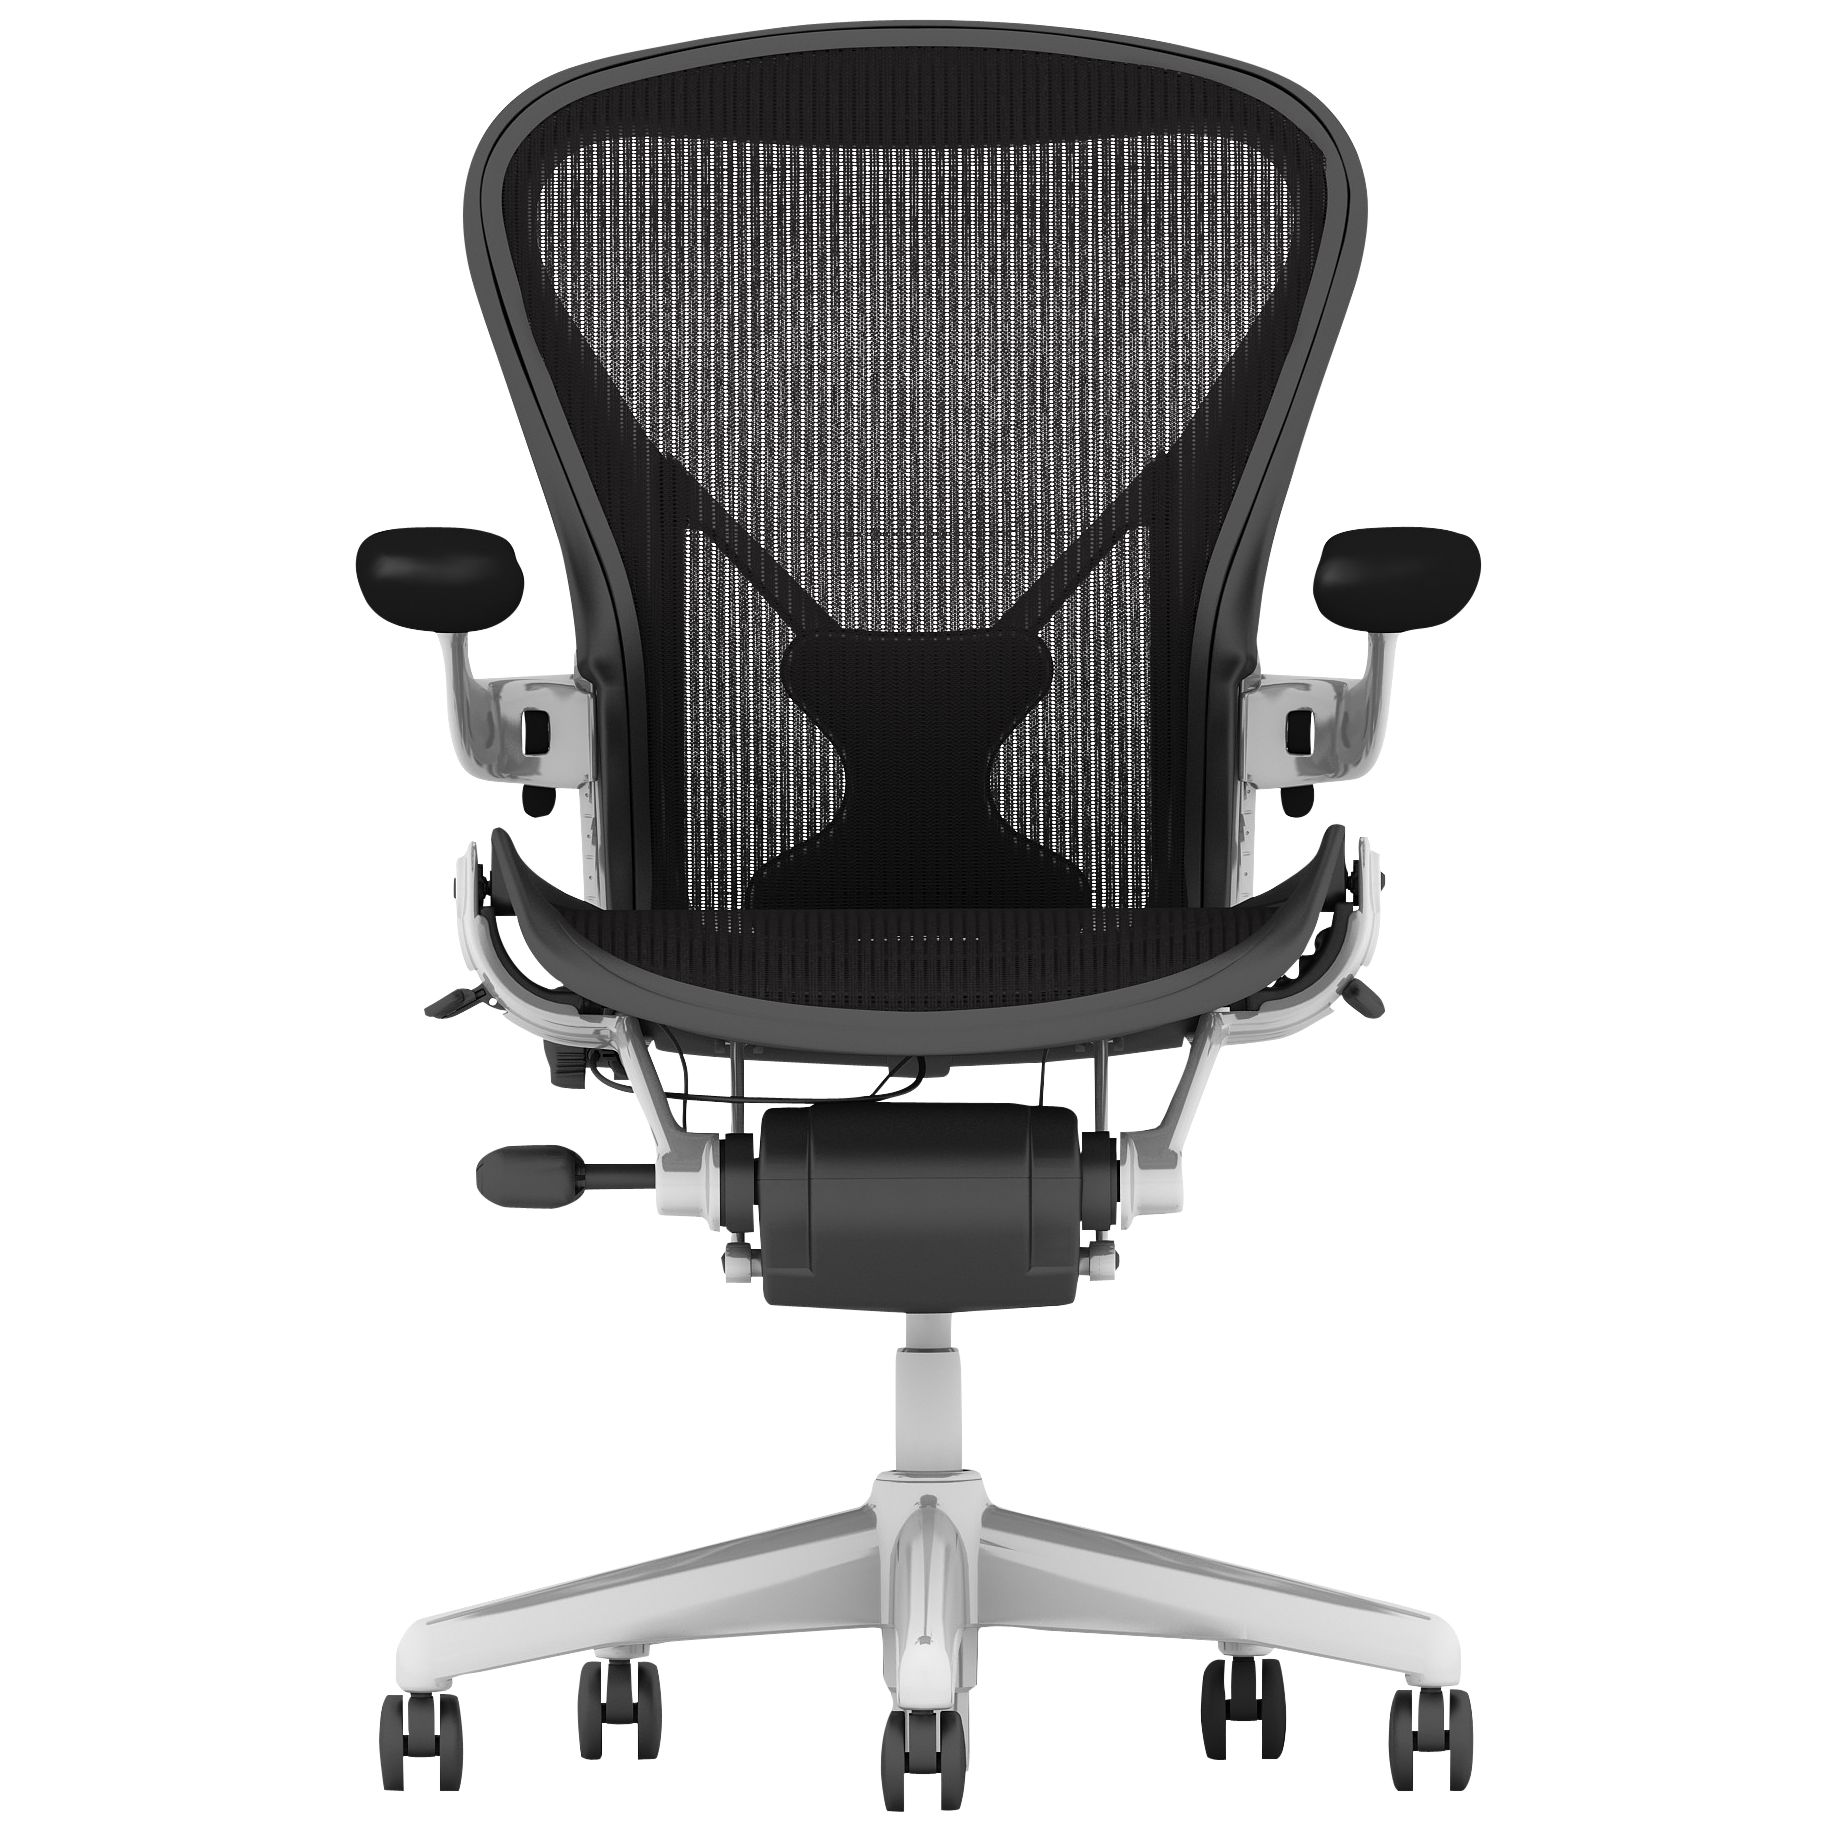 Herman Miller Aeron Office Chair, Size A,